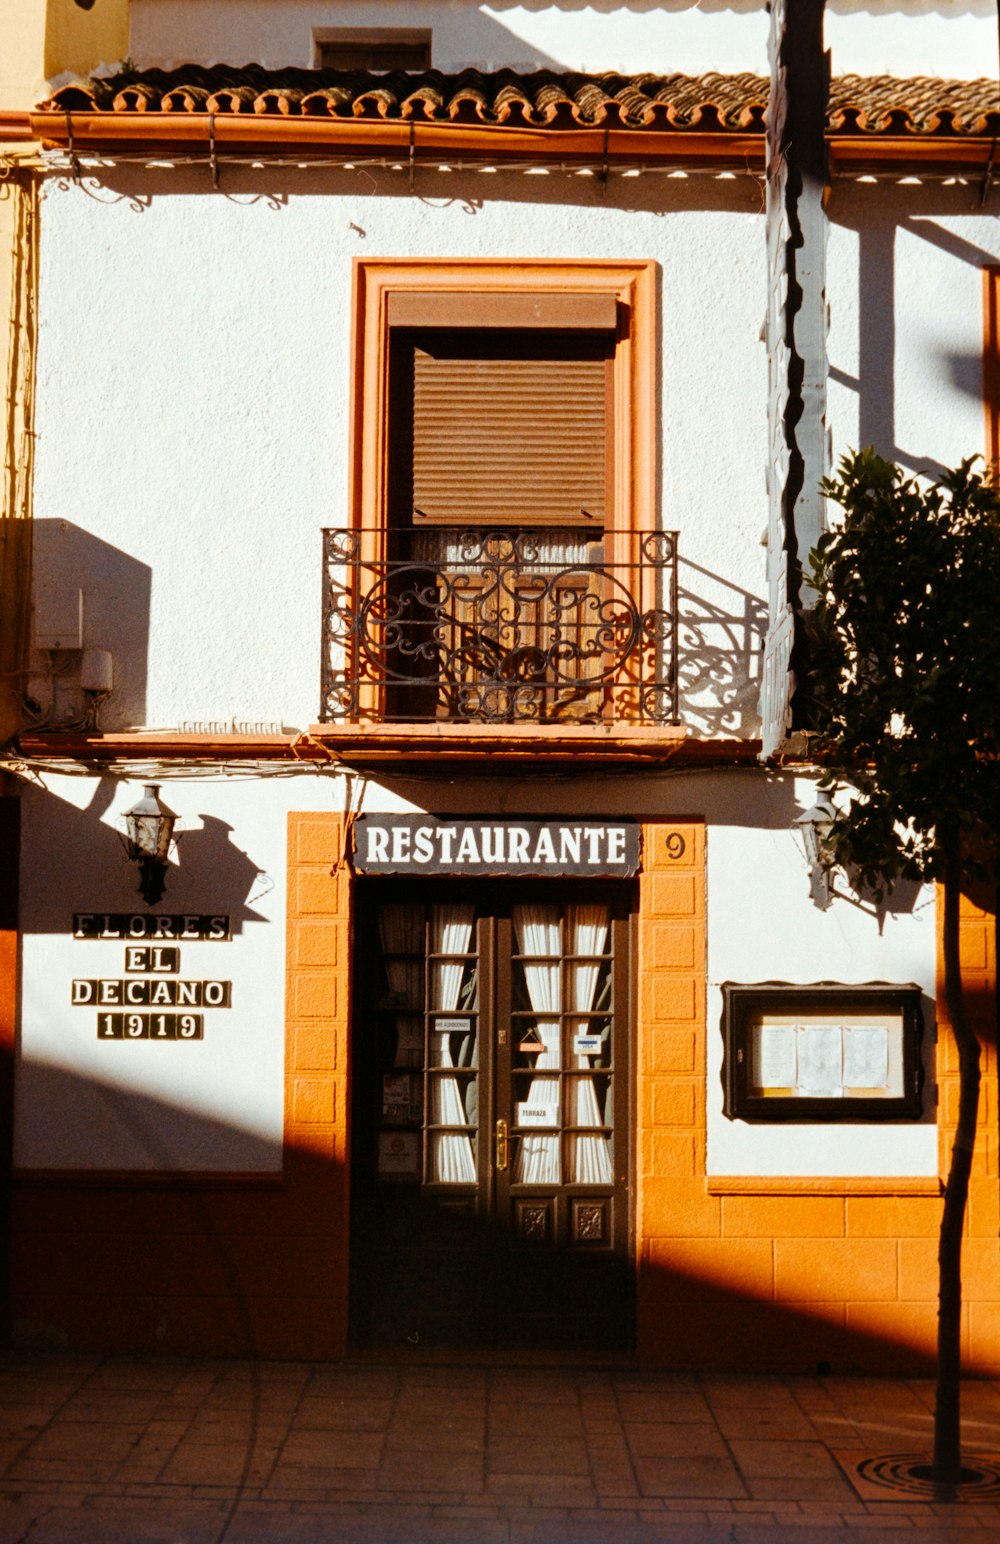 Un edificio con un letrero que dice restaurante